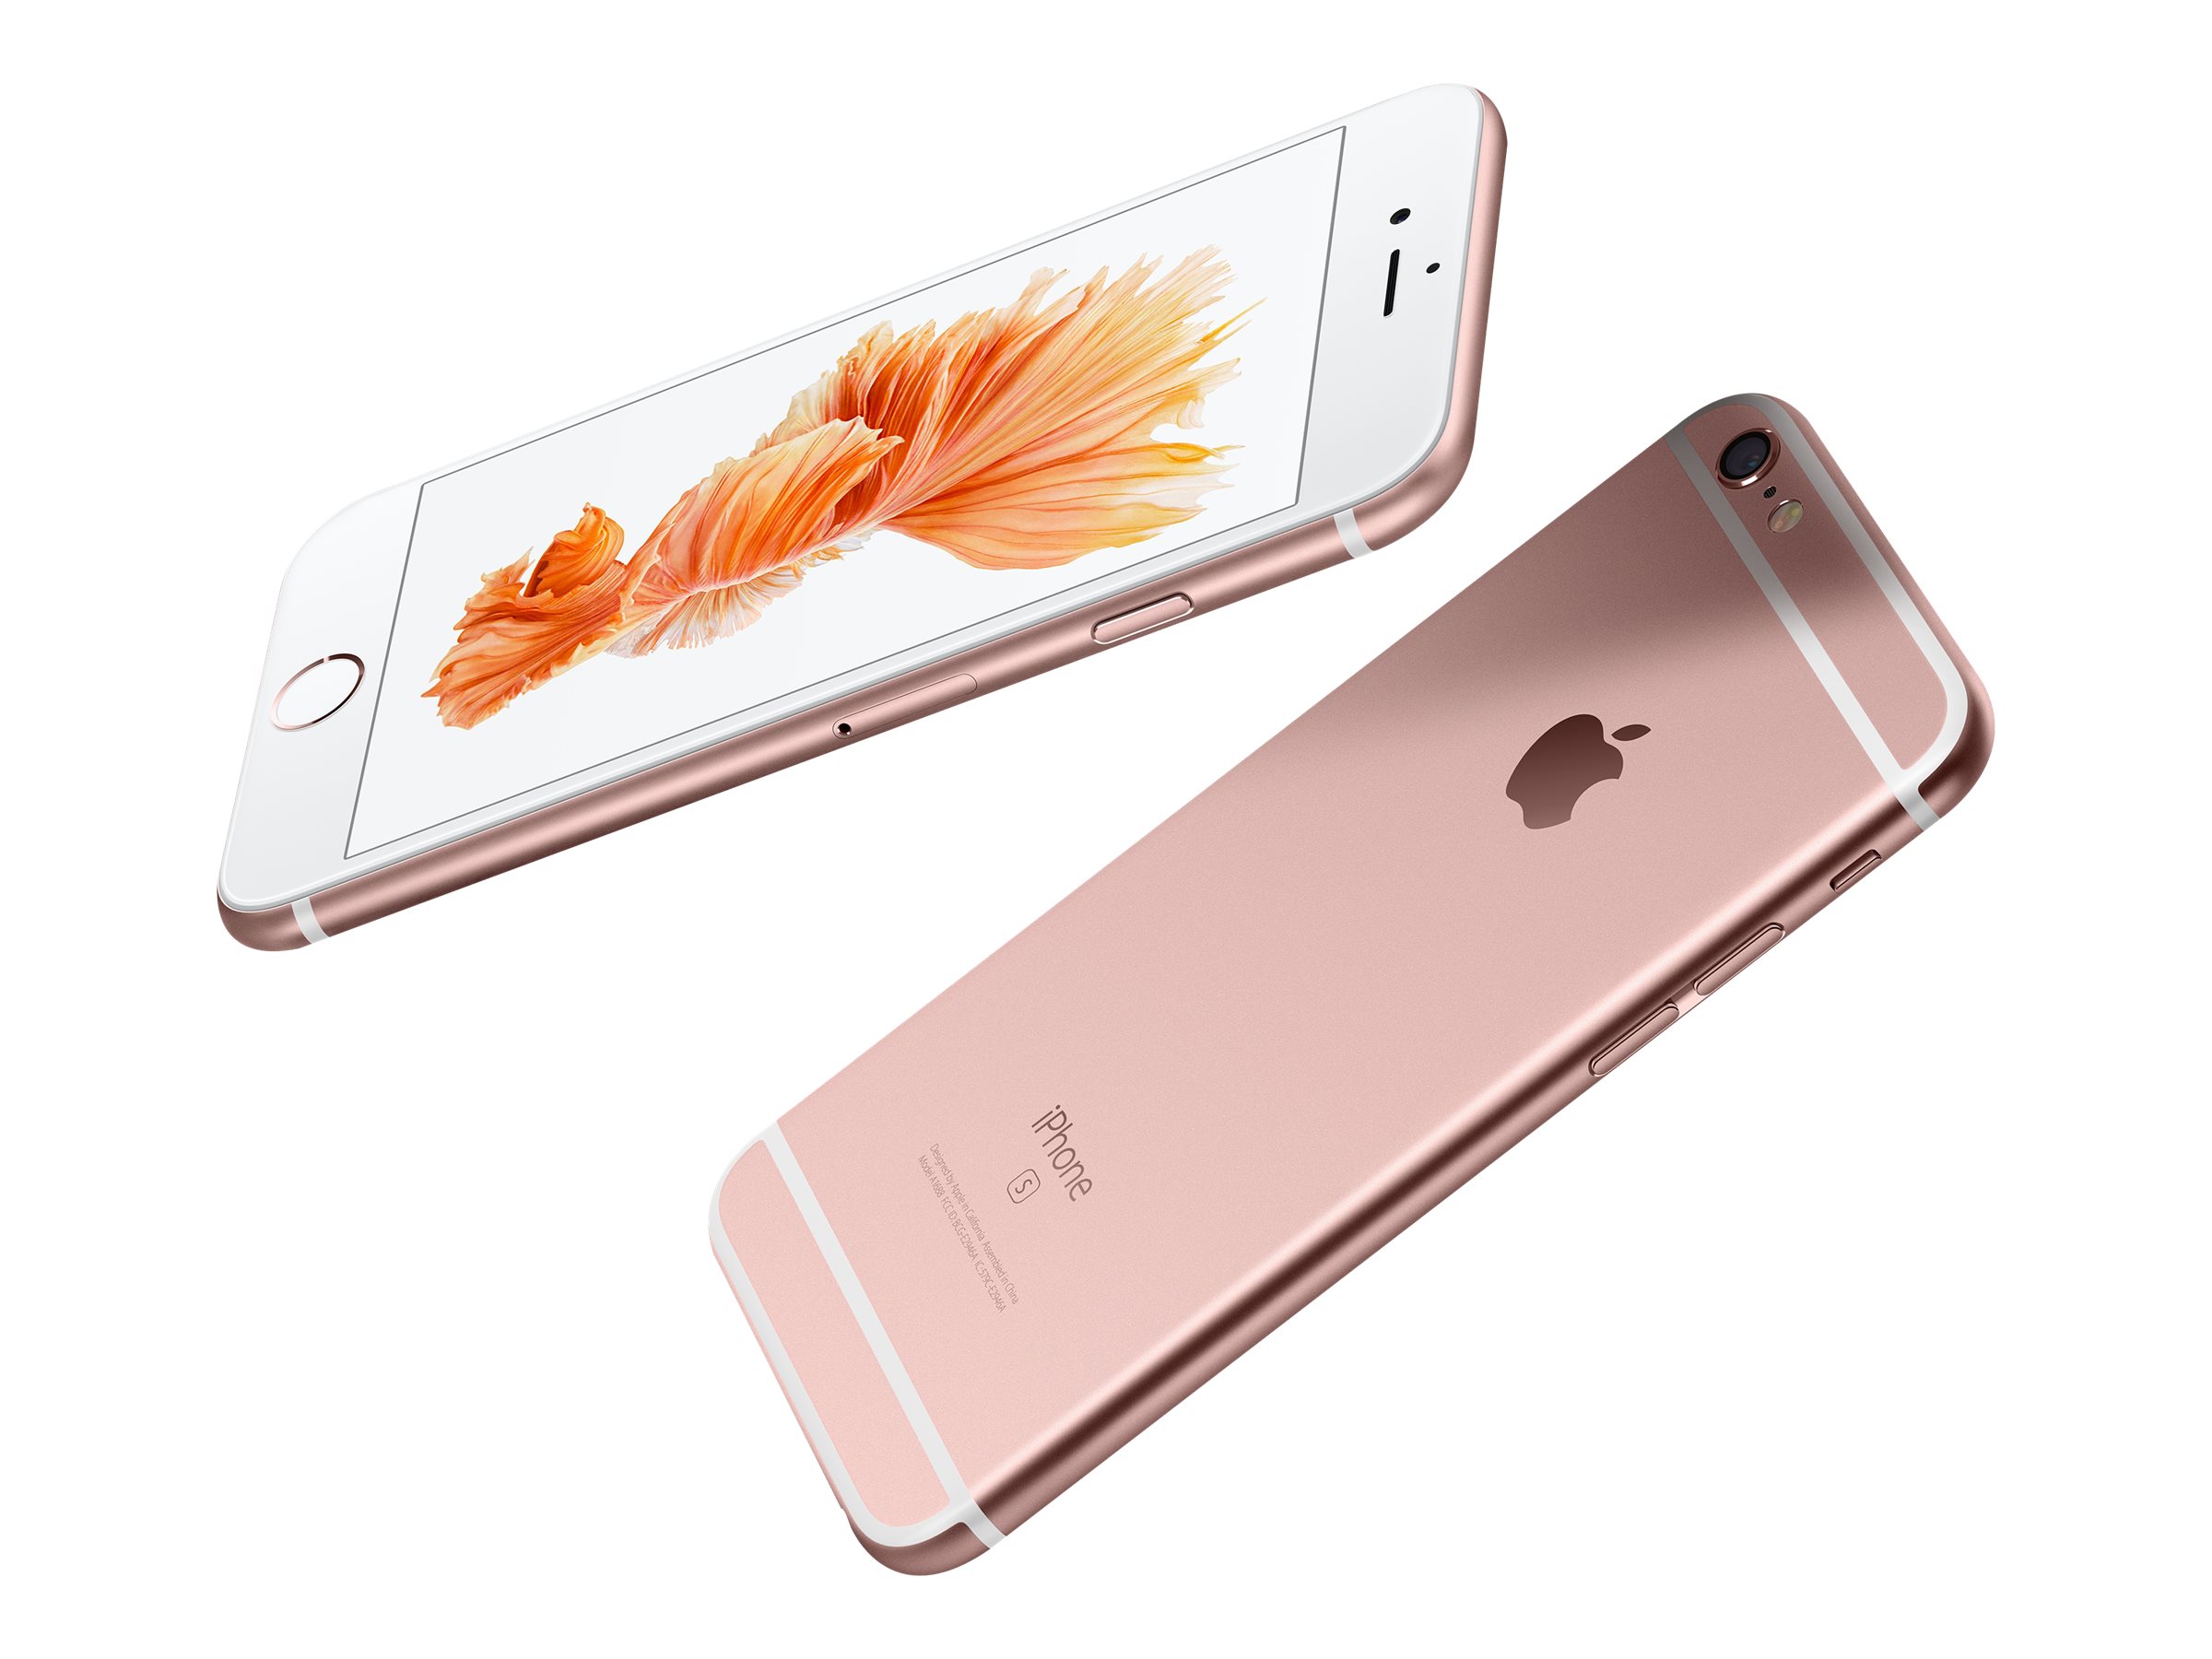 Restored Apple iPhone 6s 128GB, Rose Gold - Unlocked GSM (Refurbished) - image 3 of 3